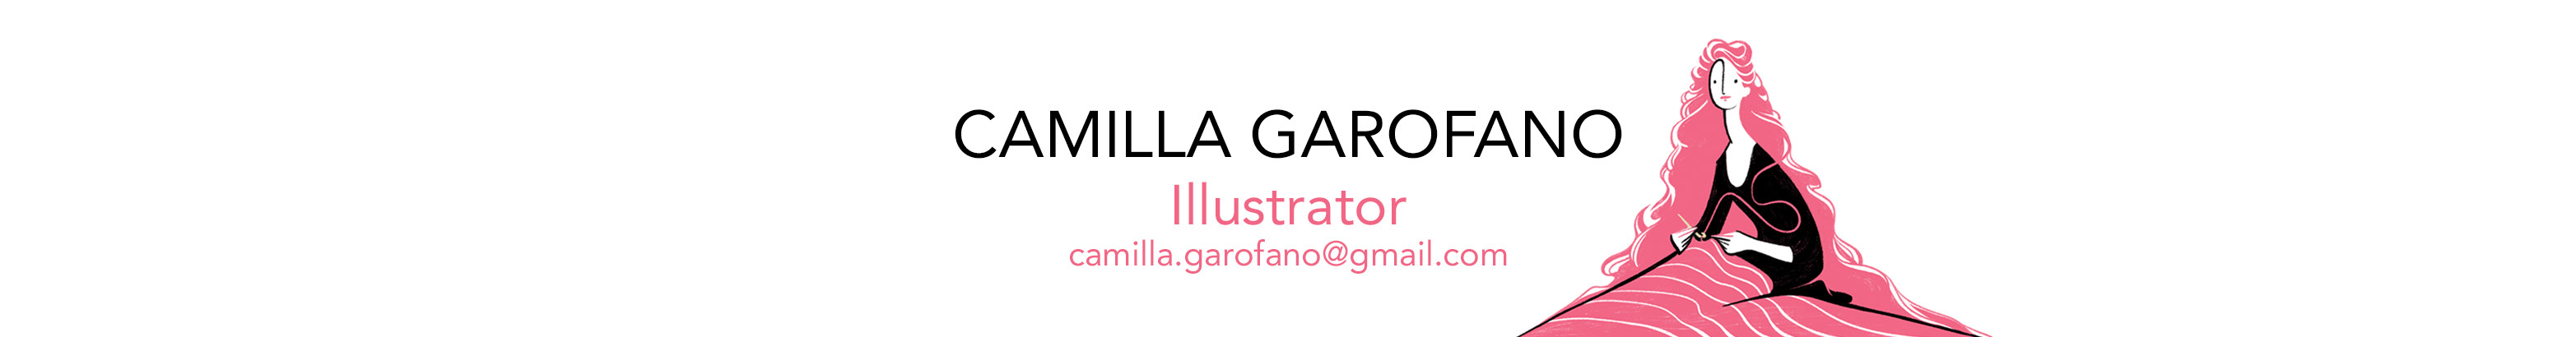 Camilla Garofano's profile banner